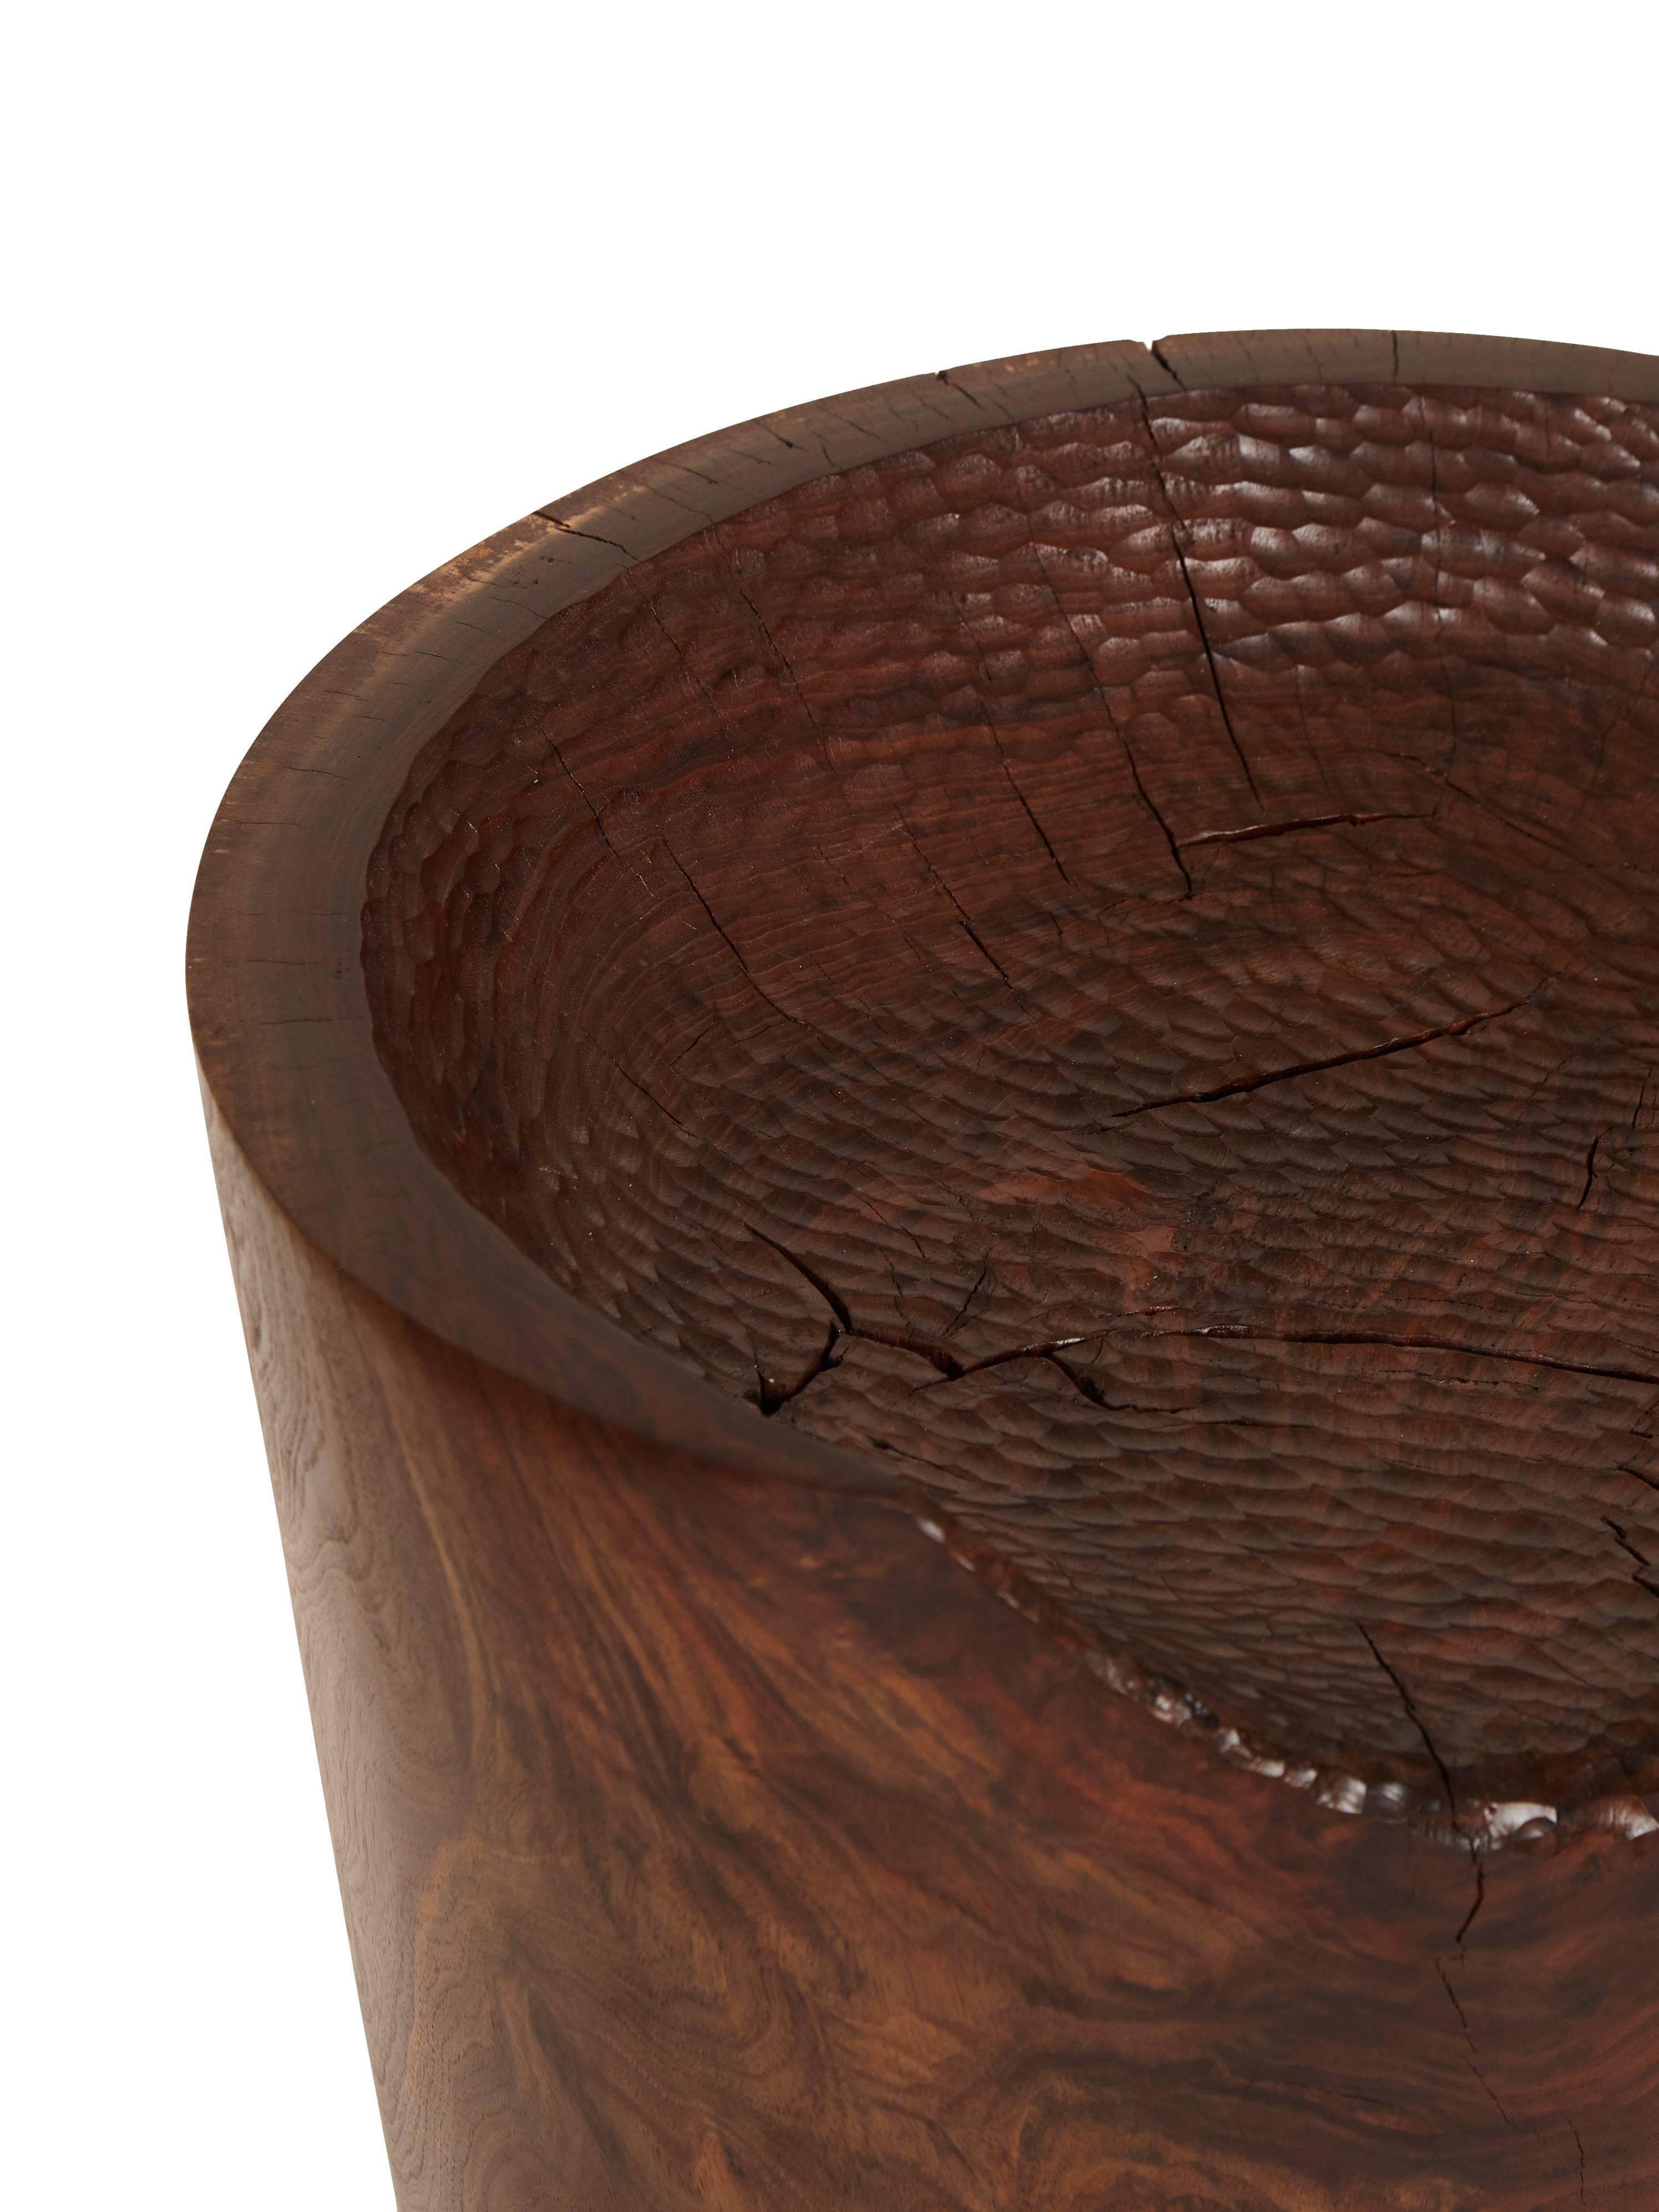 Hand-Carved Carved Stool by Caleb Woodard